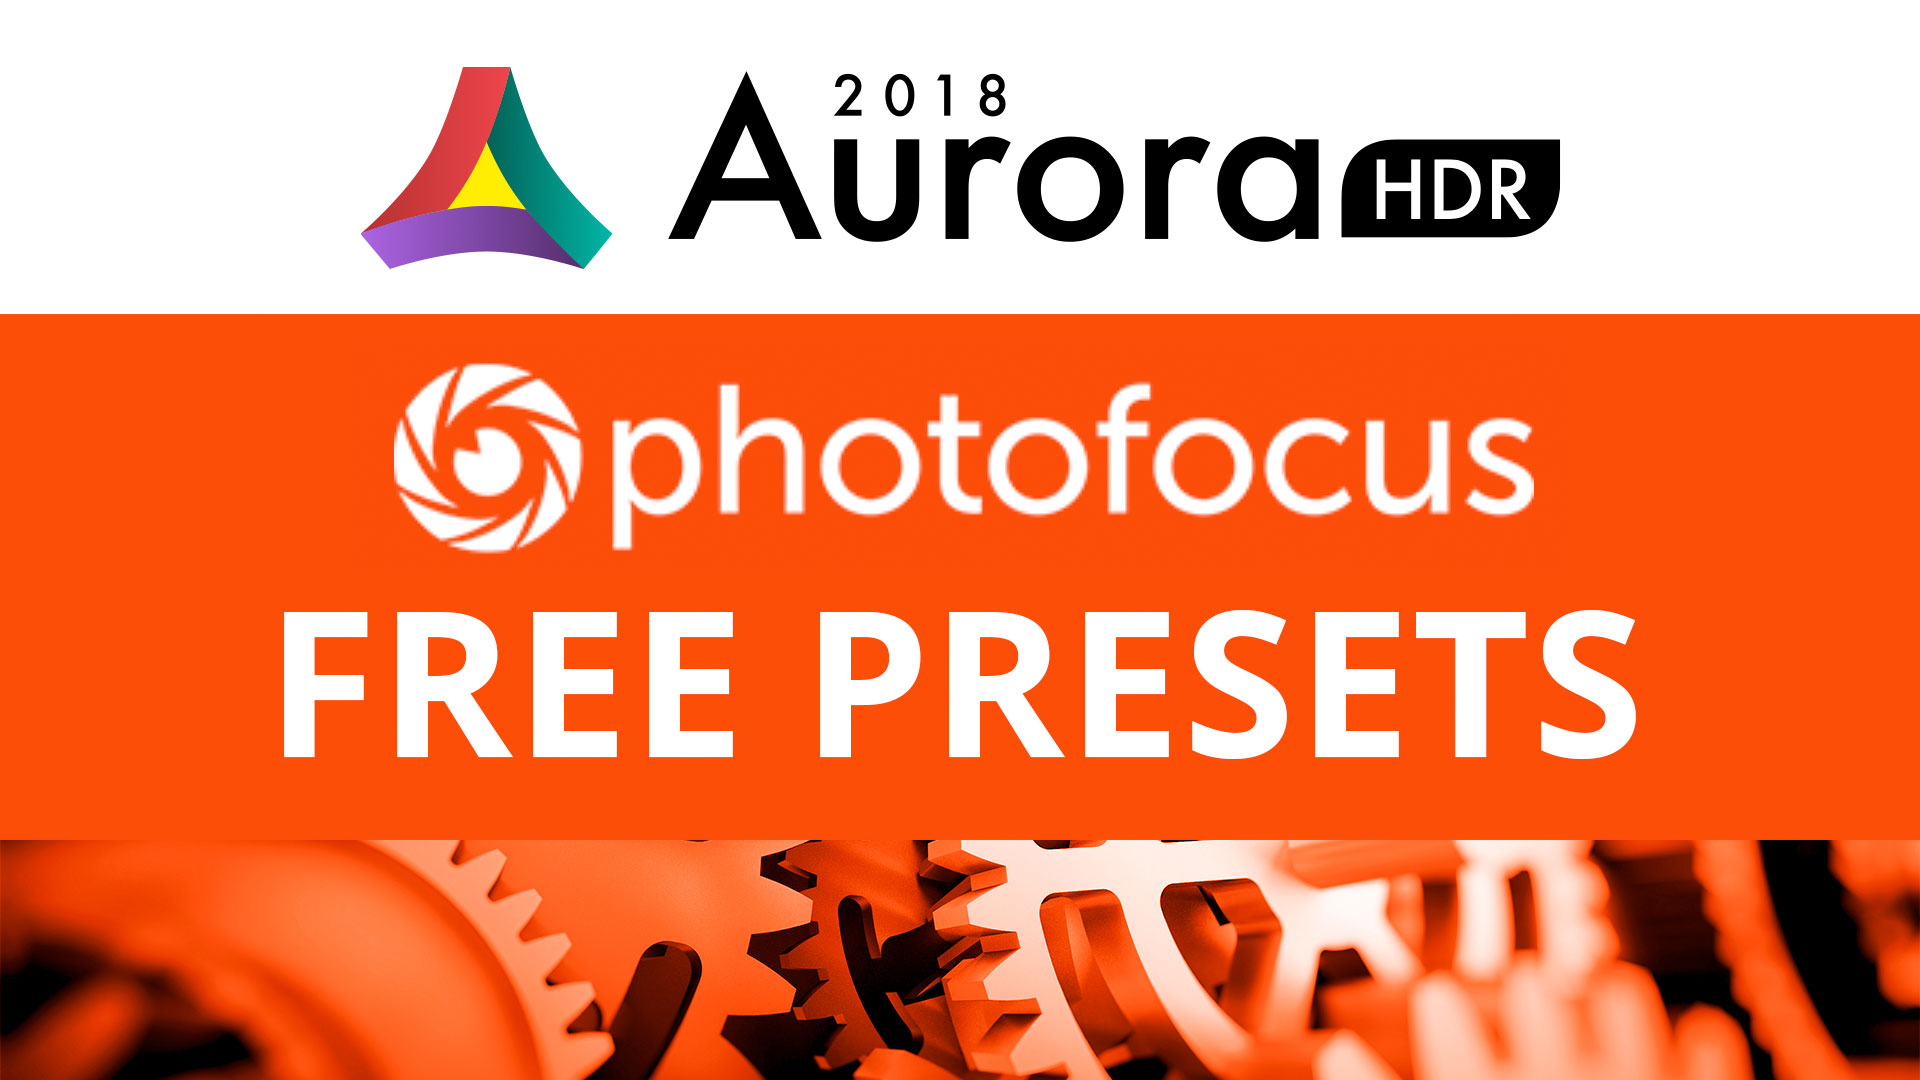 aurora hdr 2018 for mac free